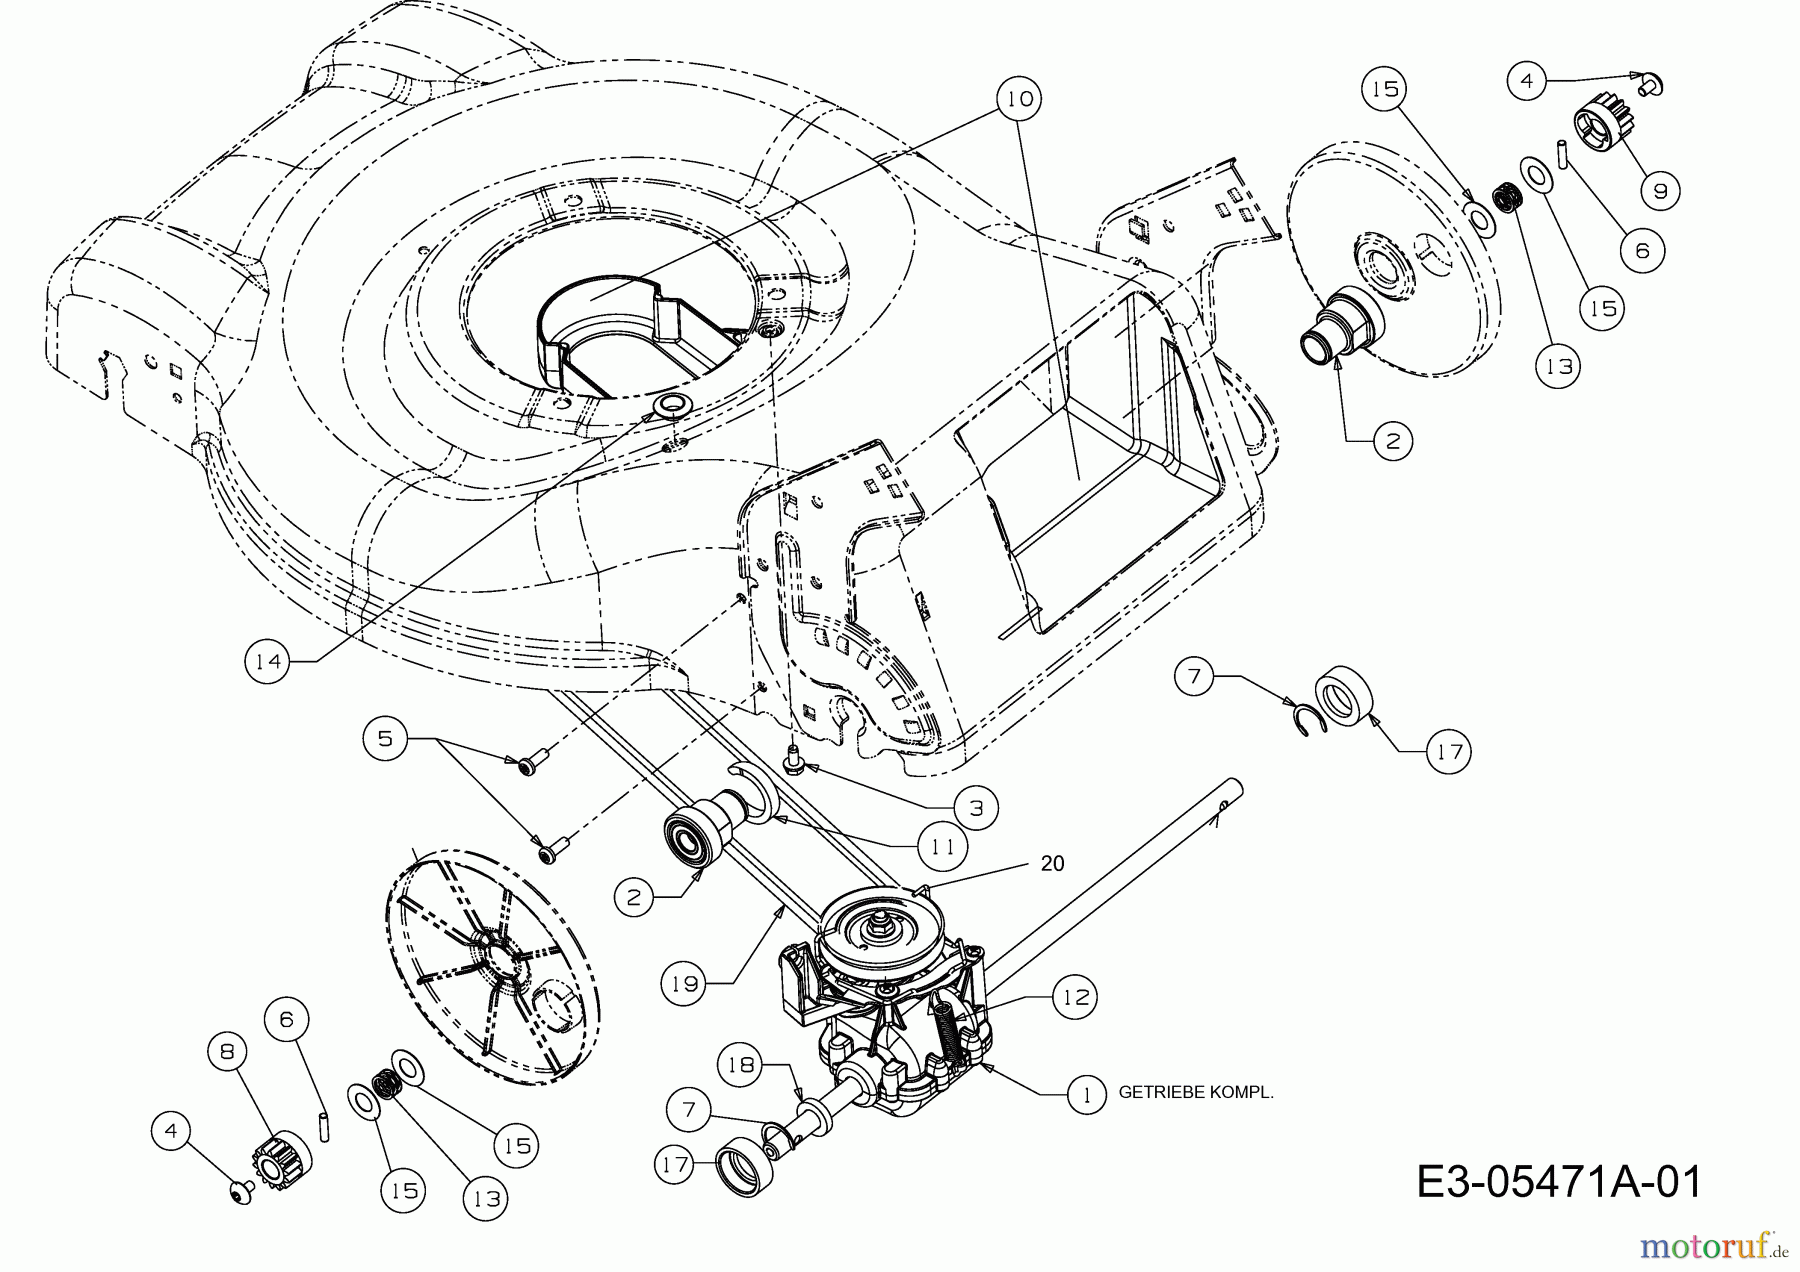  MTD Motormäher mit Antrieb 46 SPOE 12FEJ5M4600  (2011) Getriebe